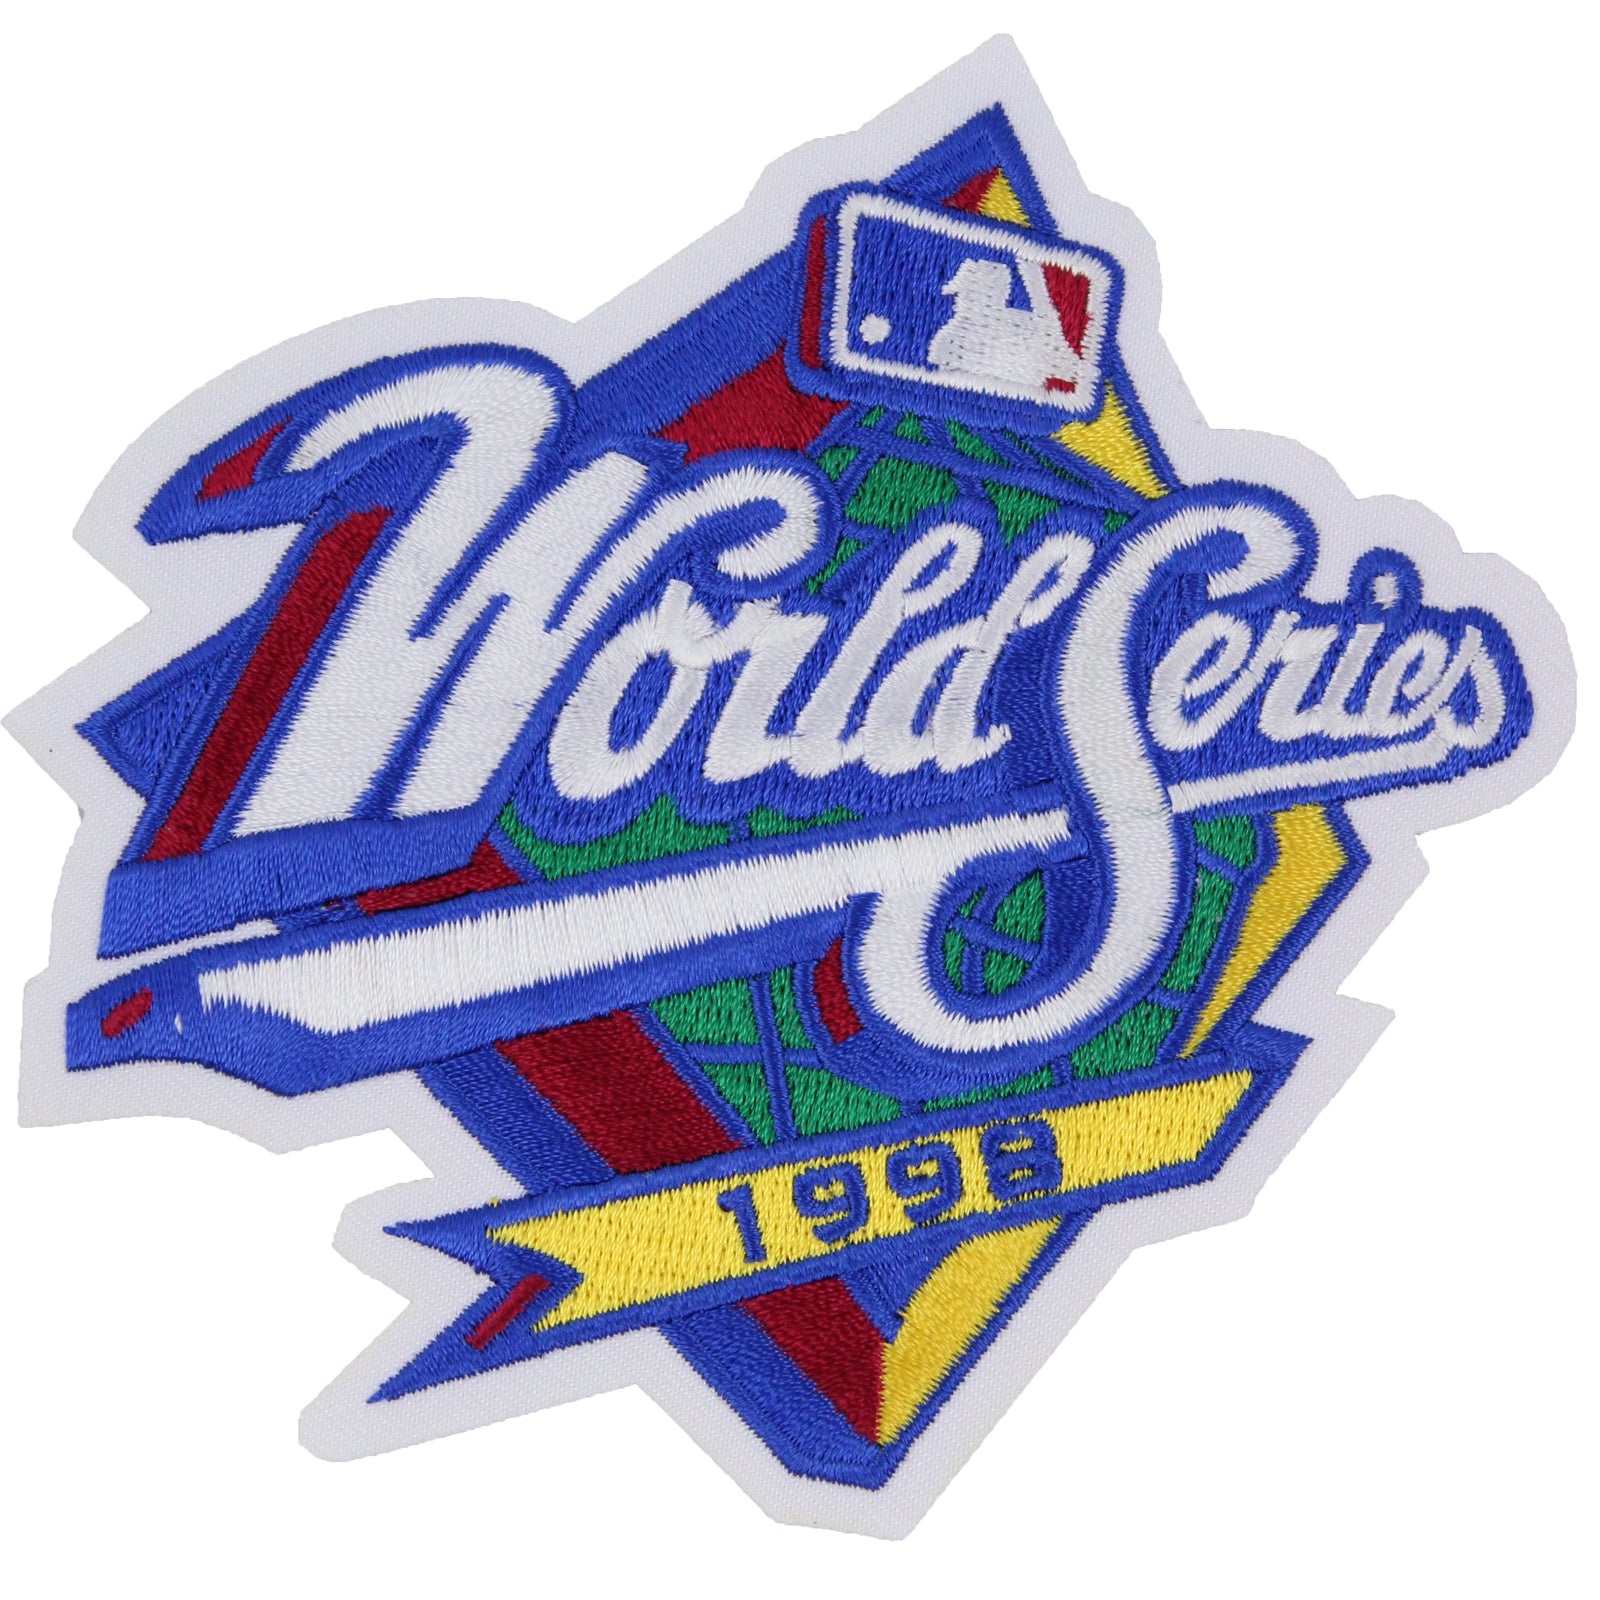 MLB World Series Patch - 1998 Yankees